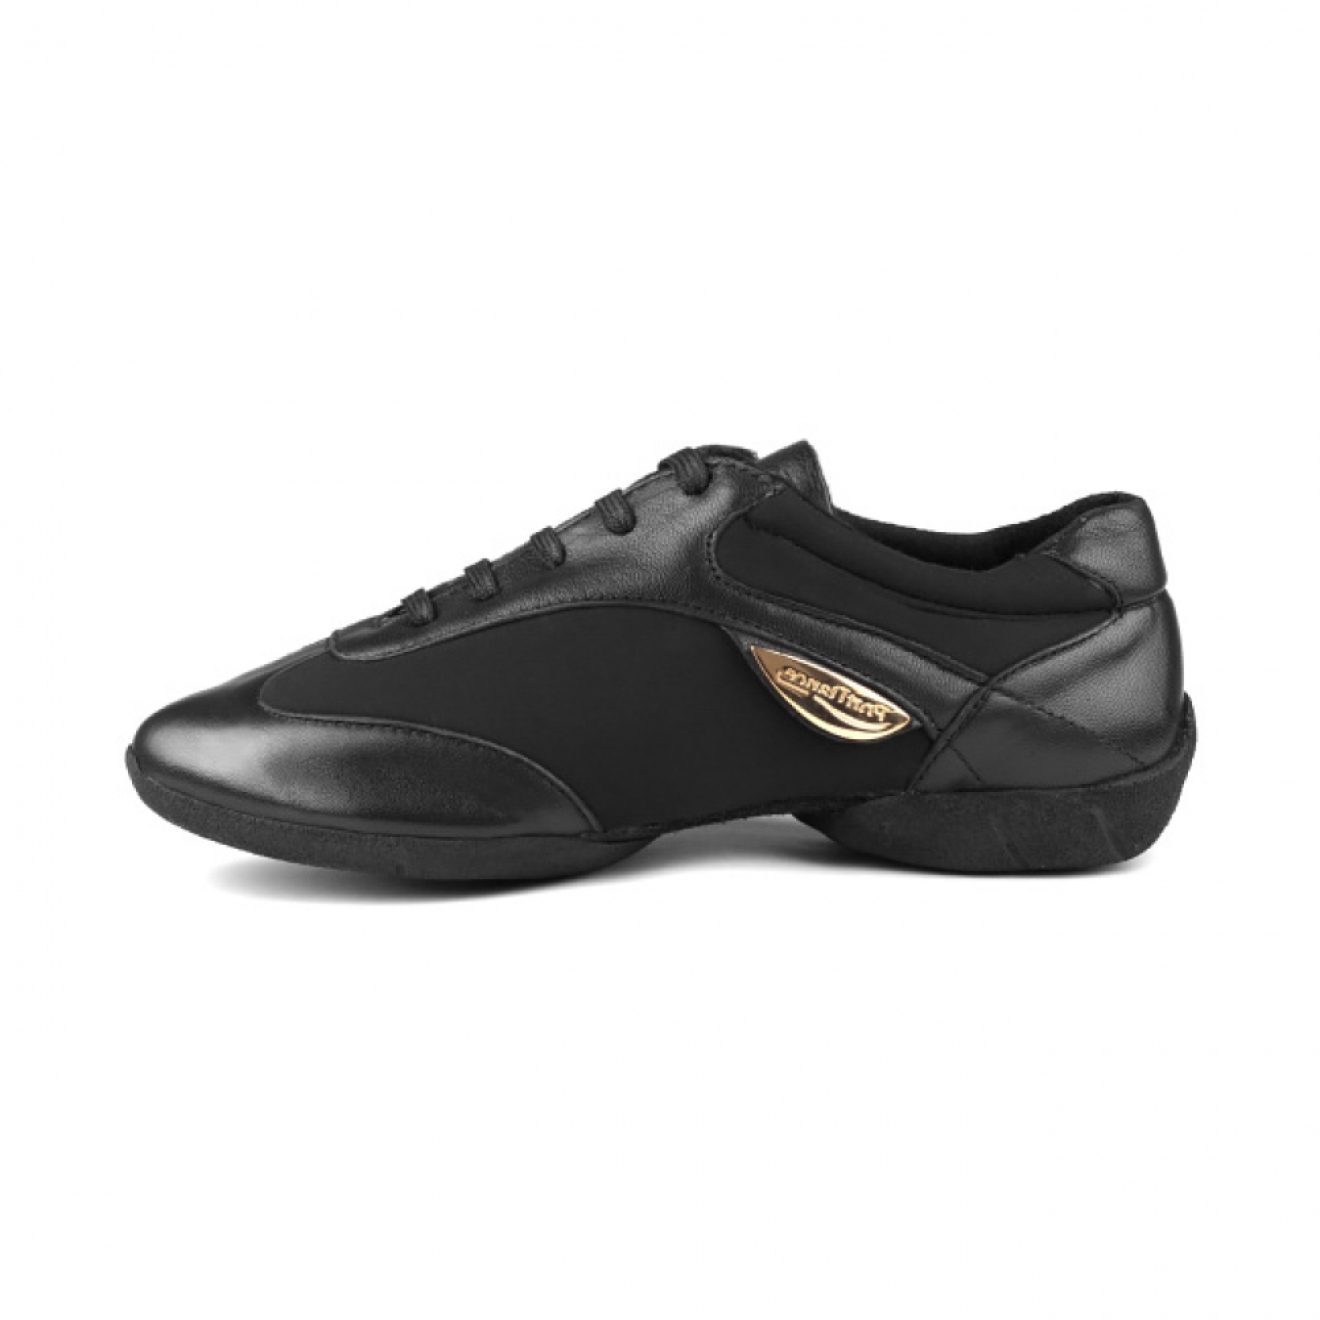 PortDance PD03, black Leather Sneaker